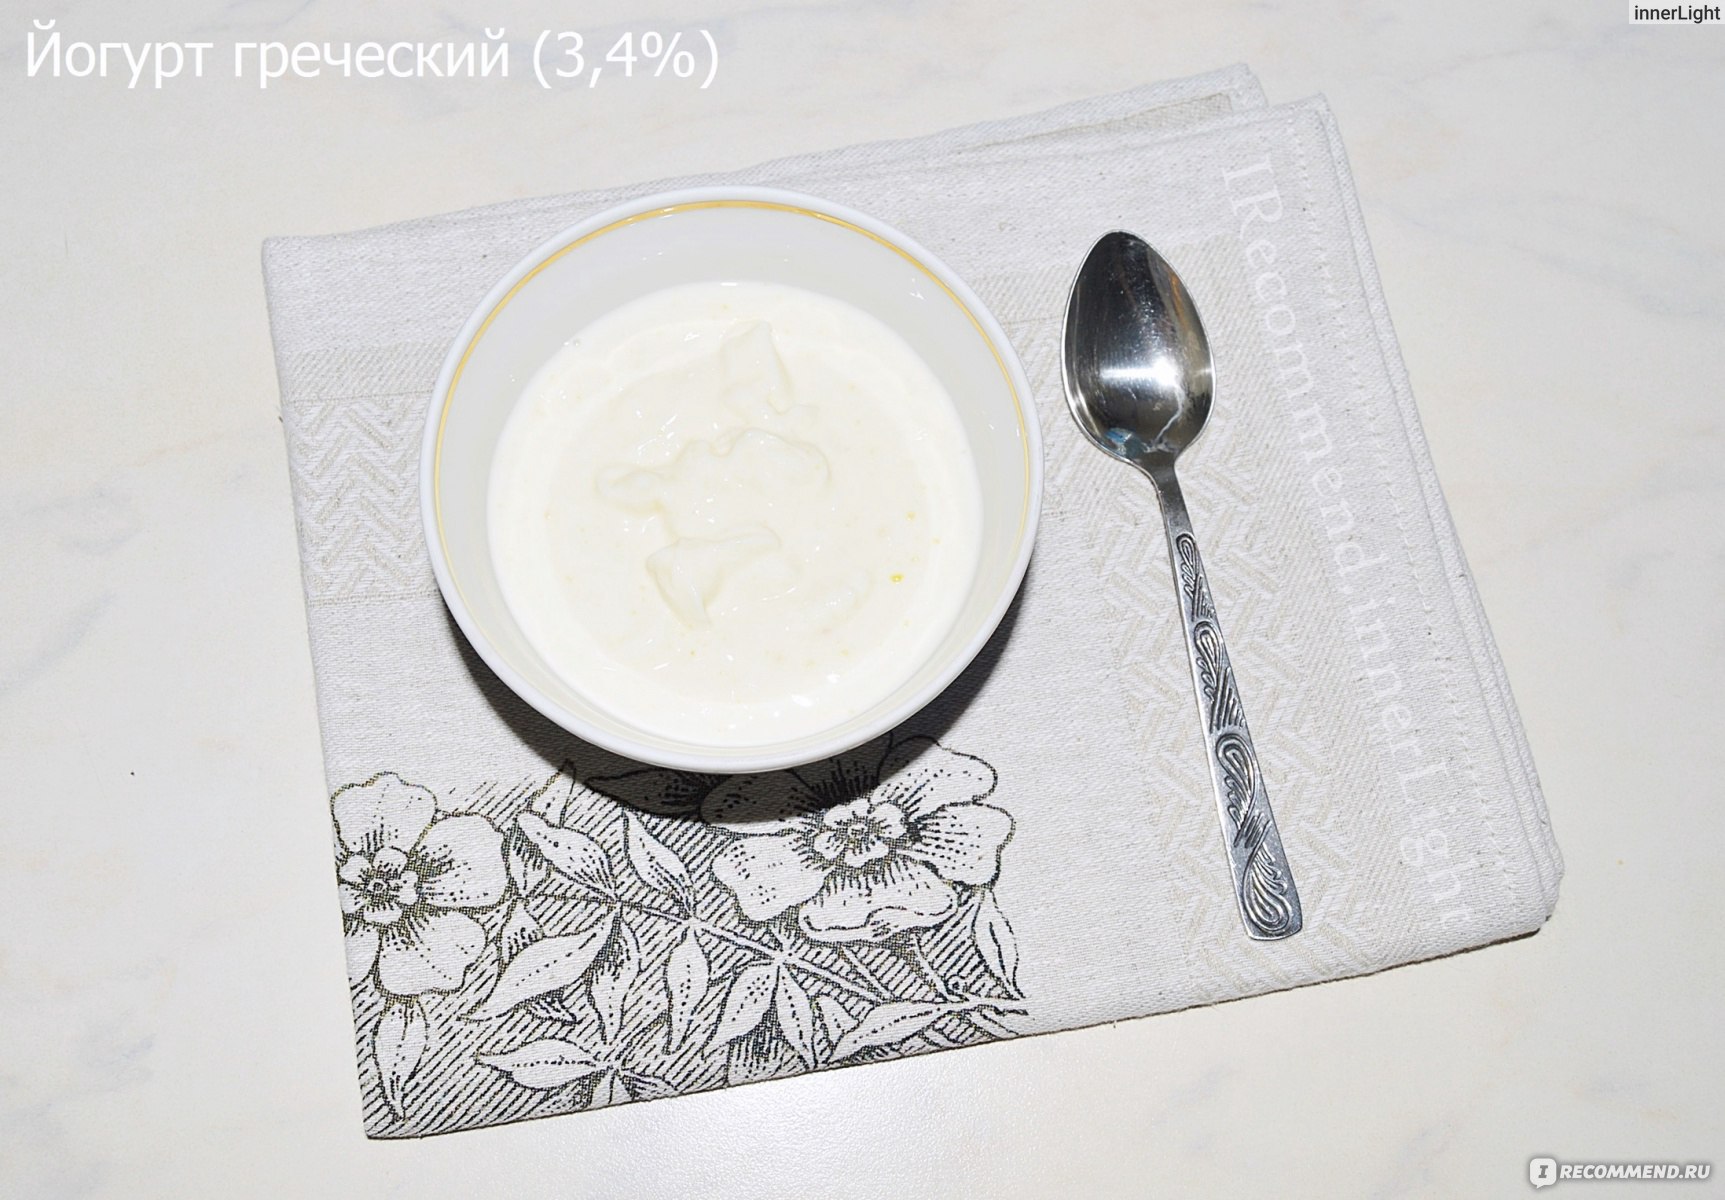 йогурт греческий (3,4% жирности)